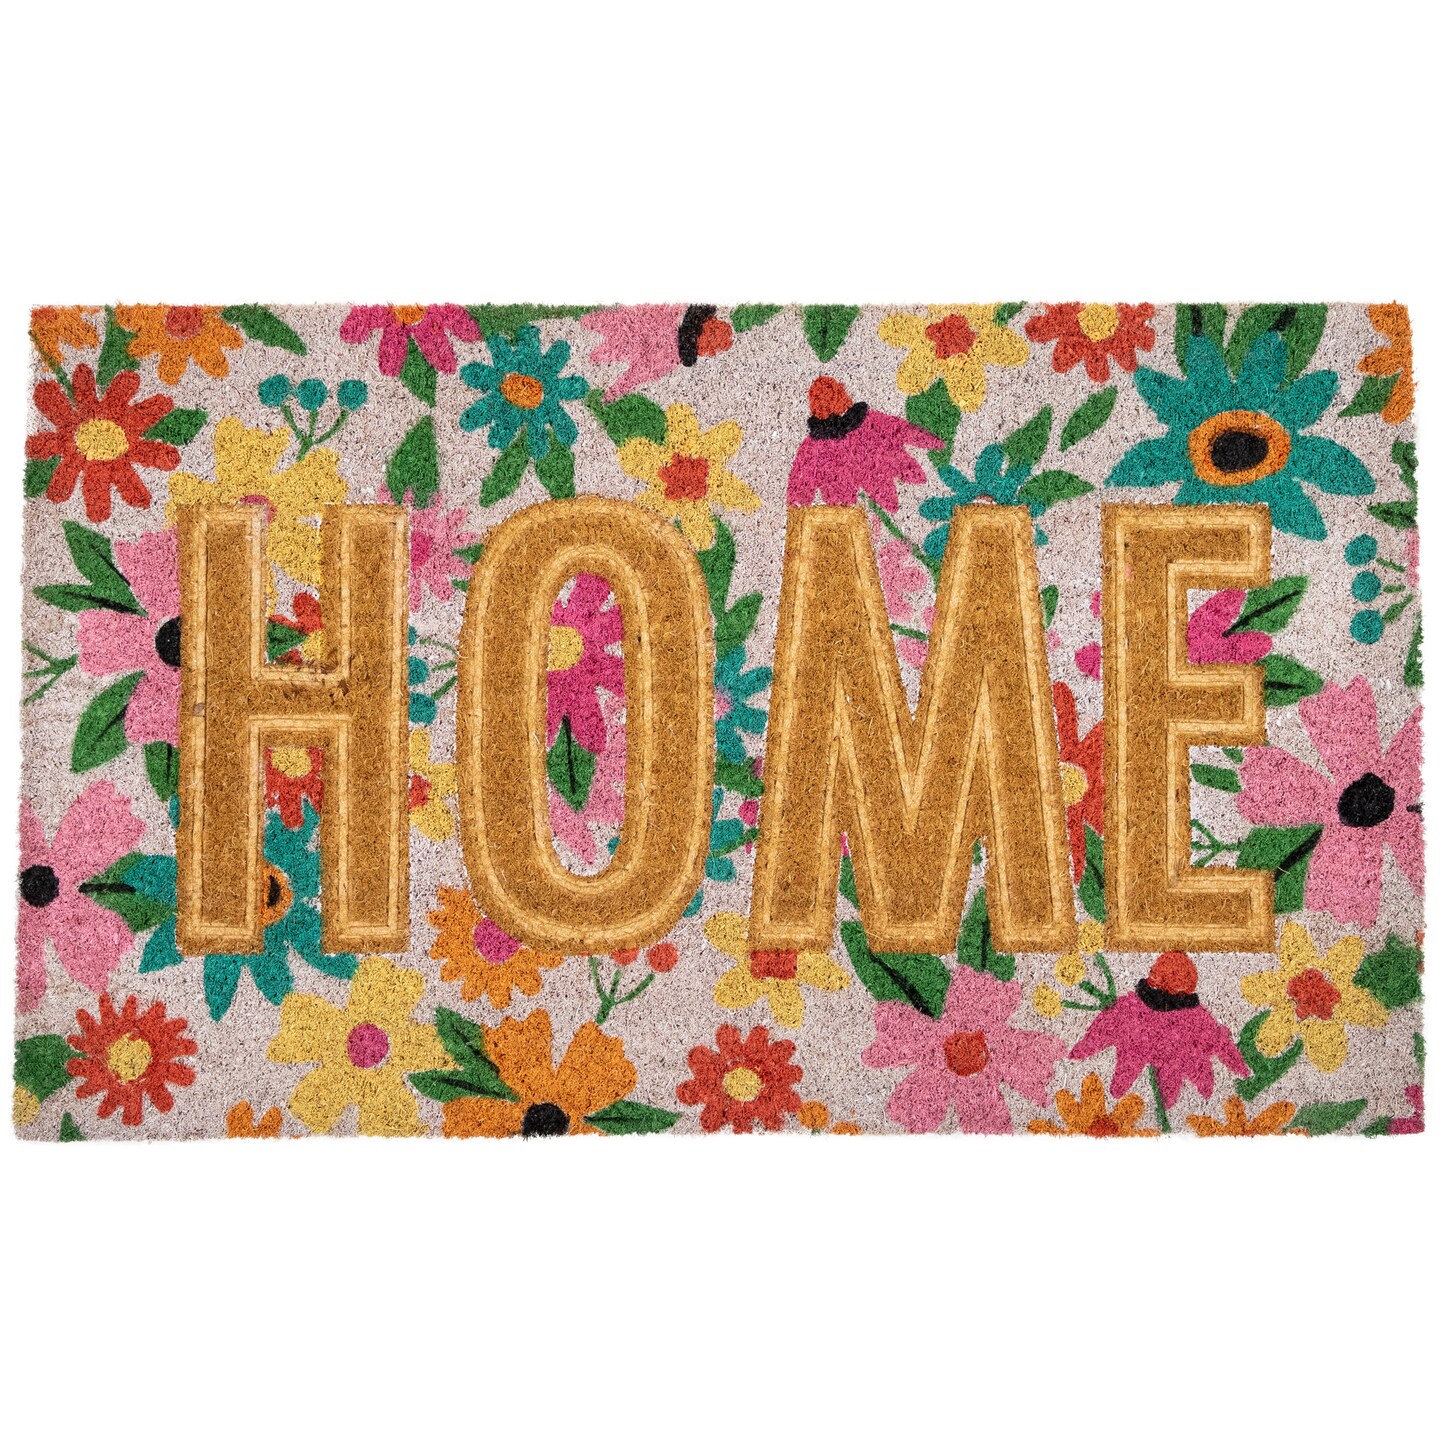 Natural Coir Home Sweet Home Rectangular Outdoor Doormat 18 x 30